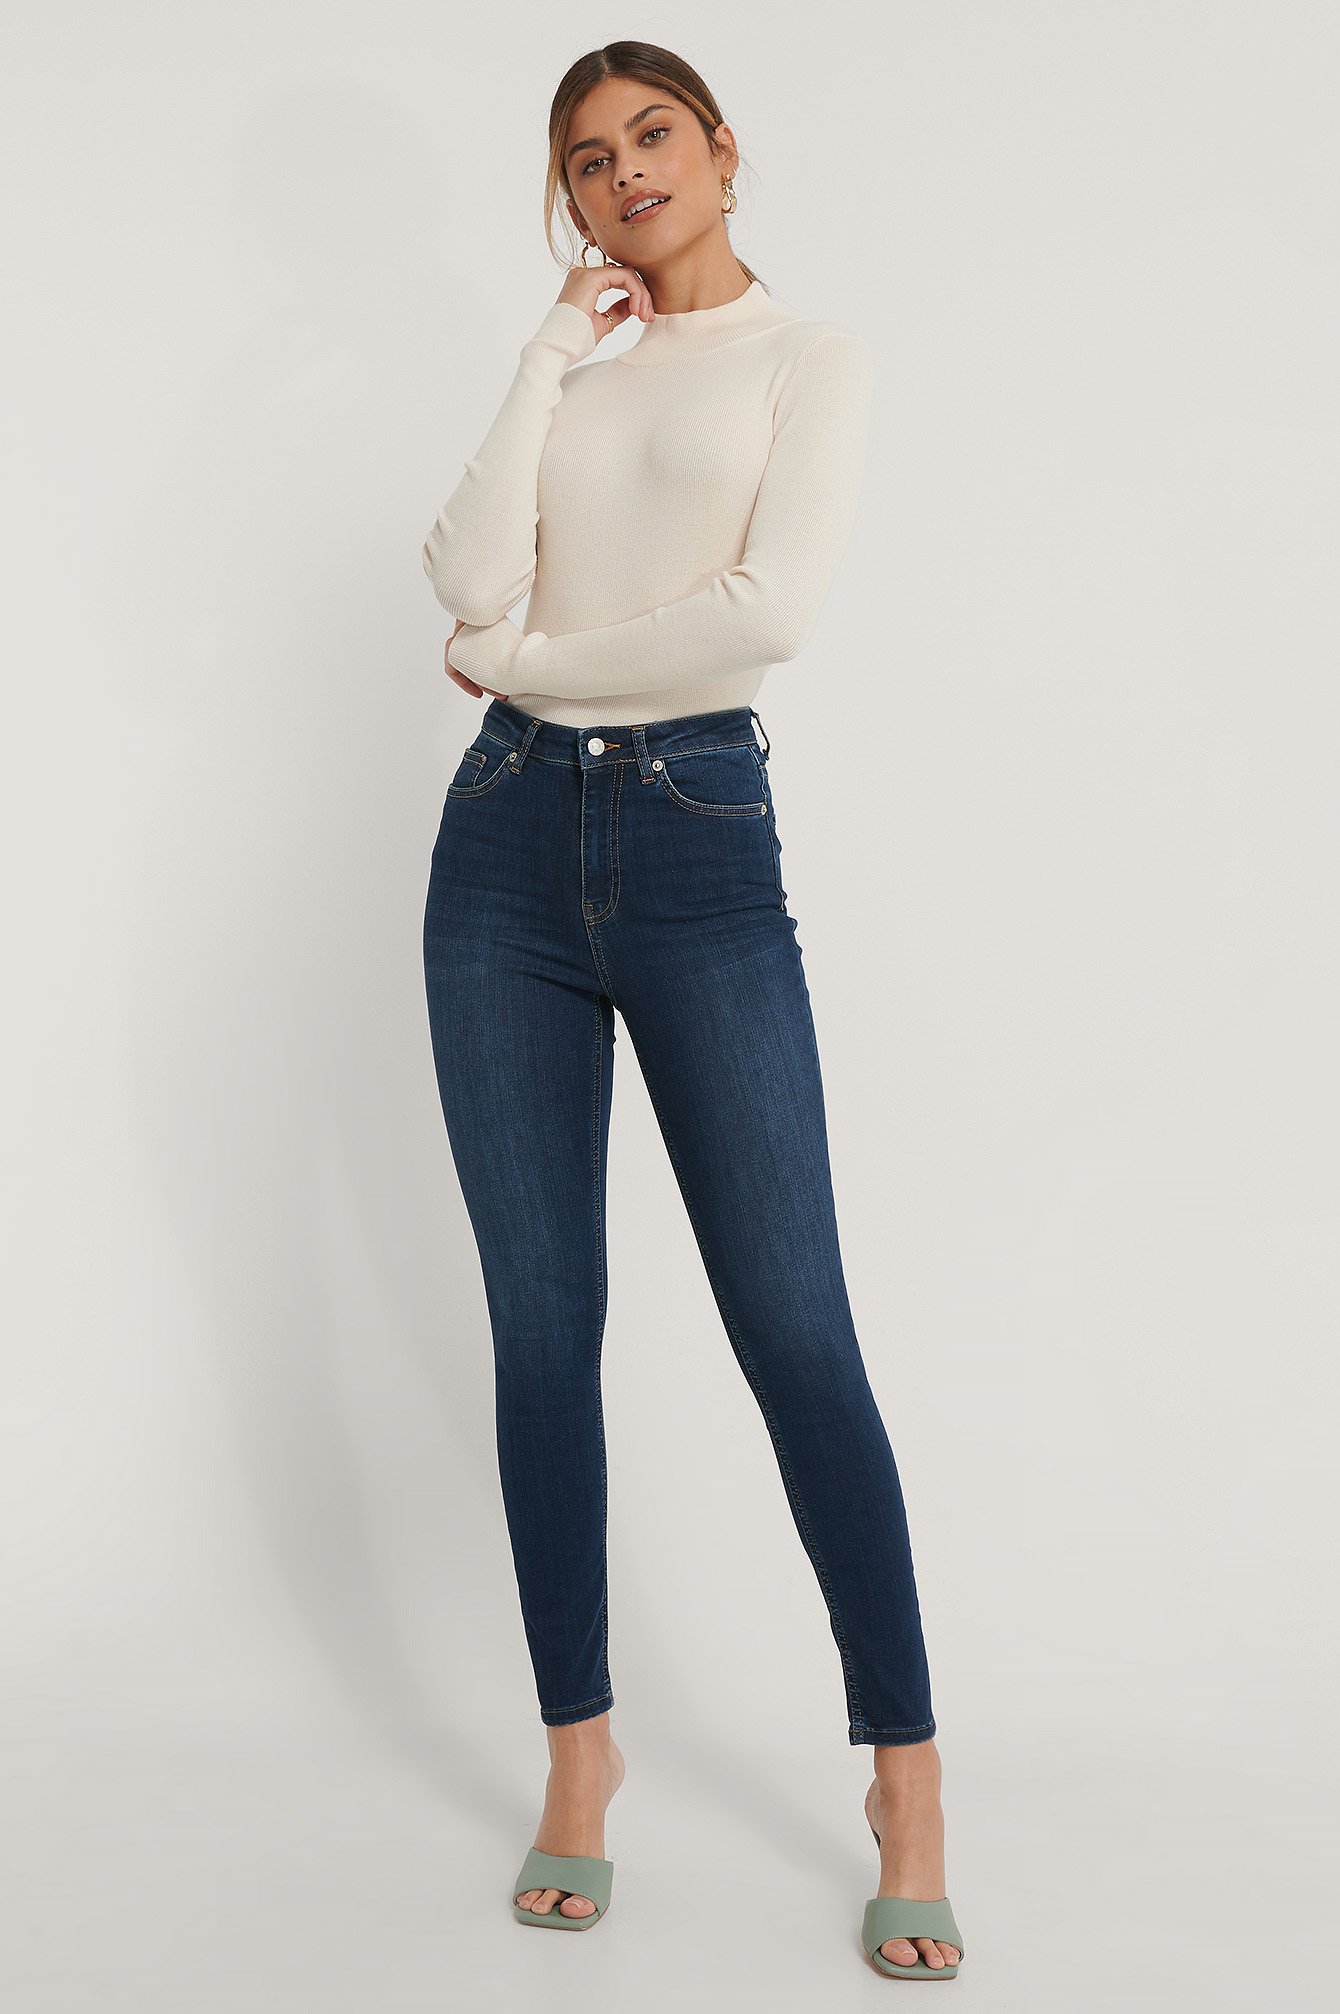 Mode Spijkerbroeken Hoge taille jeans Anne L Hoge taille jeans bruin casual uitstraling 